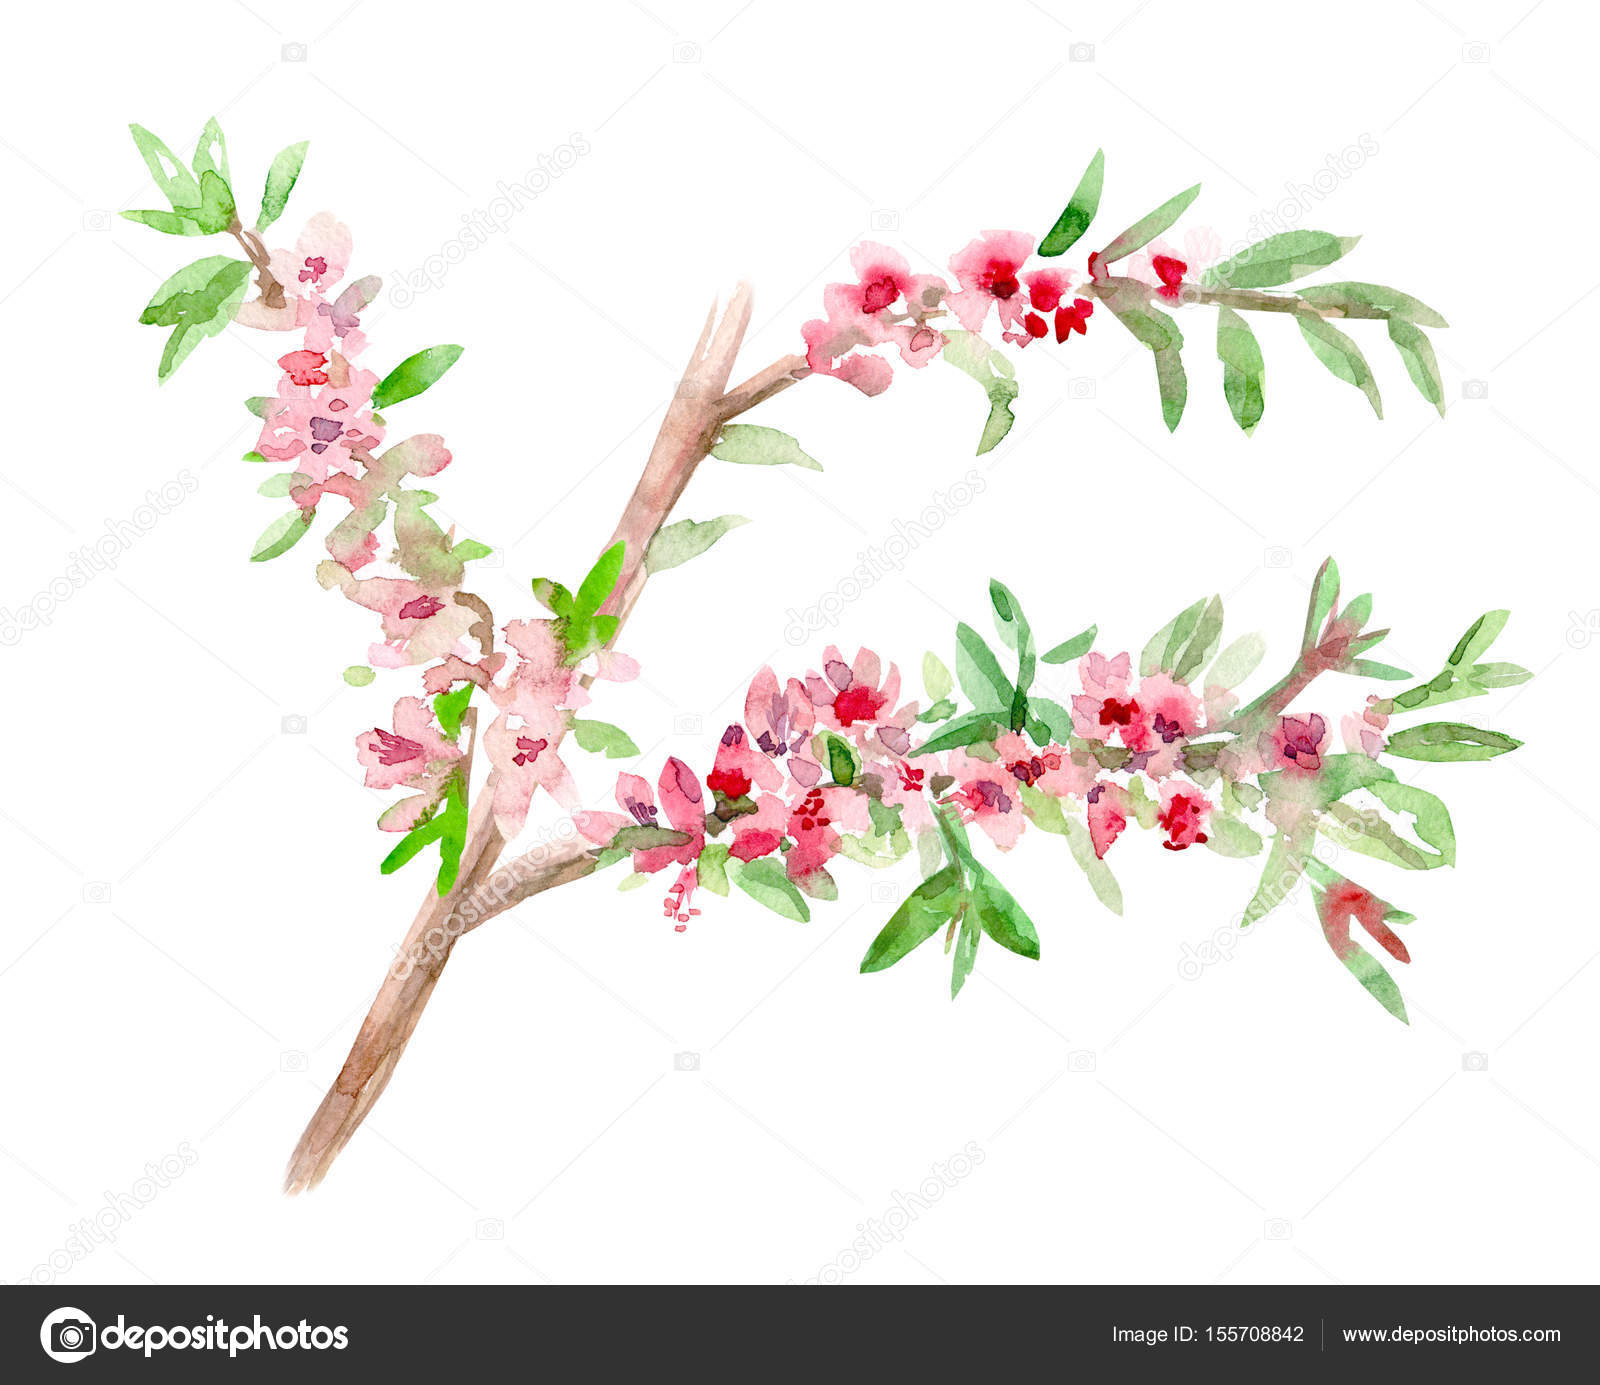 almond blossom flowering twig. — Stock Photo © Oksana #155708842